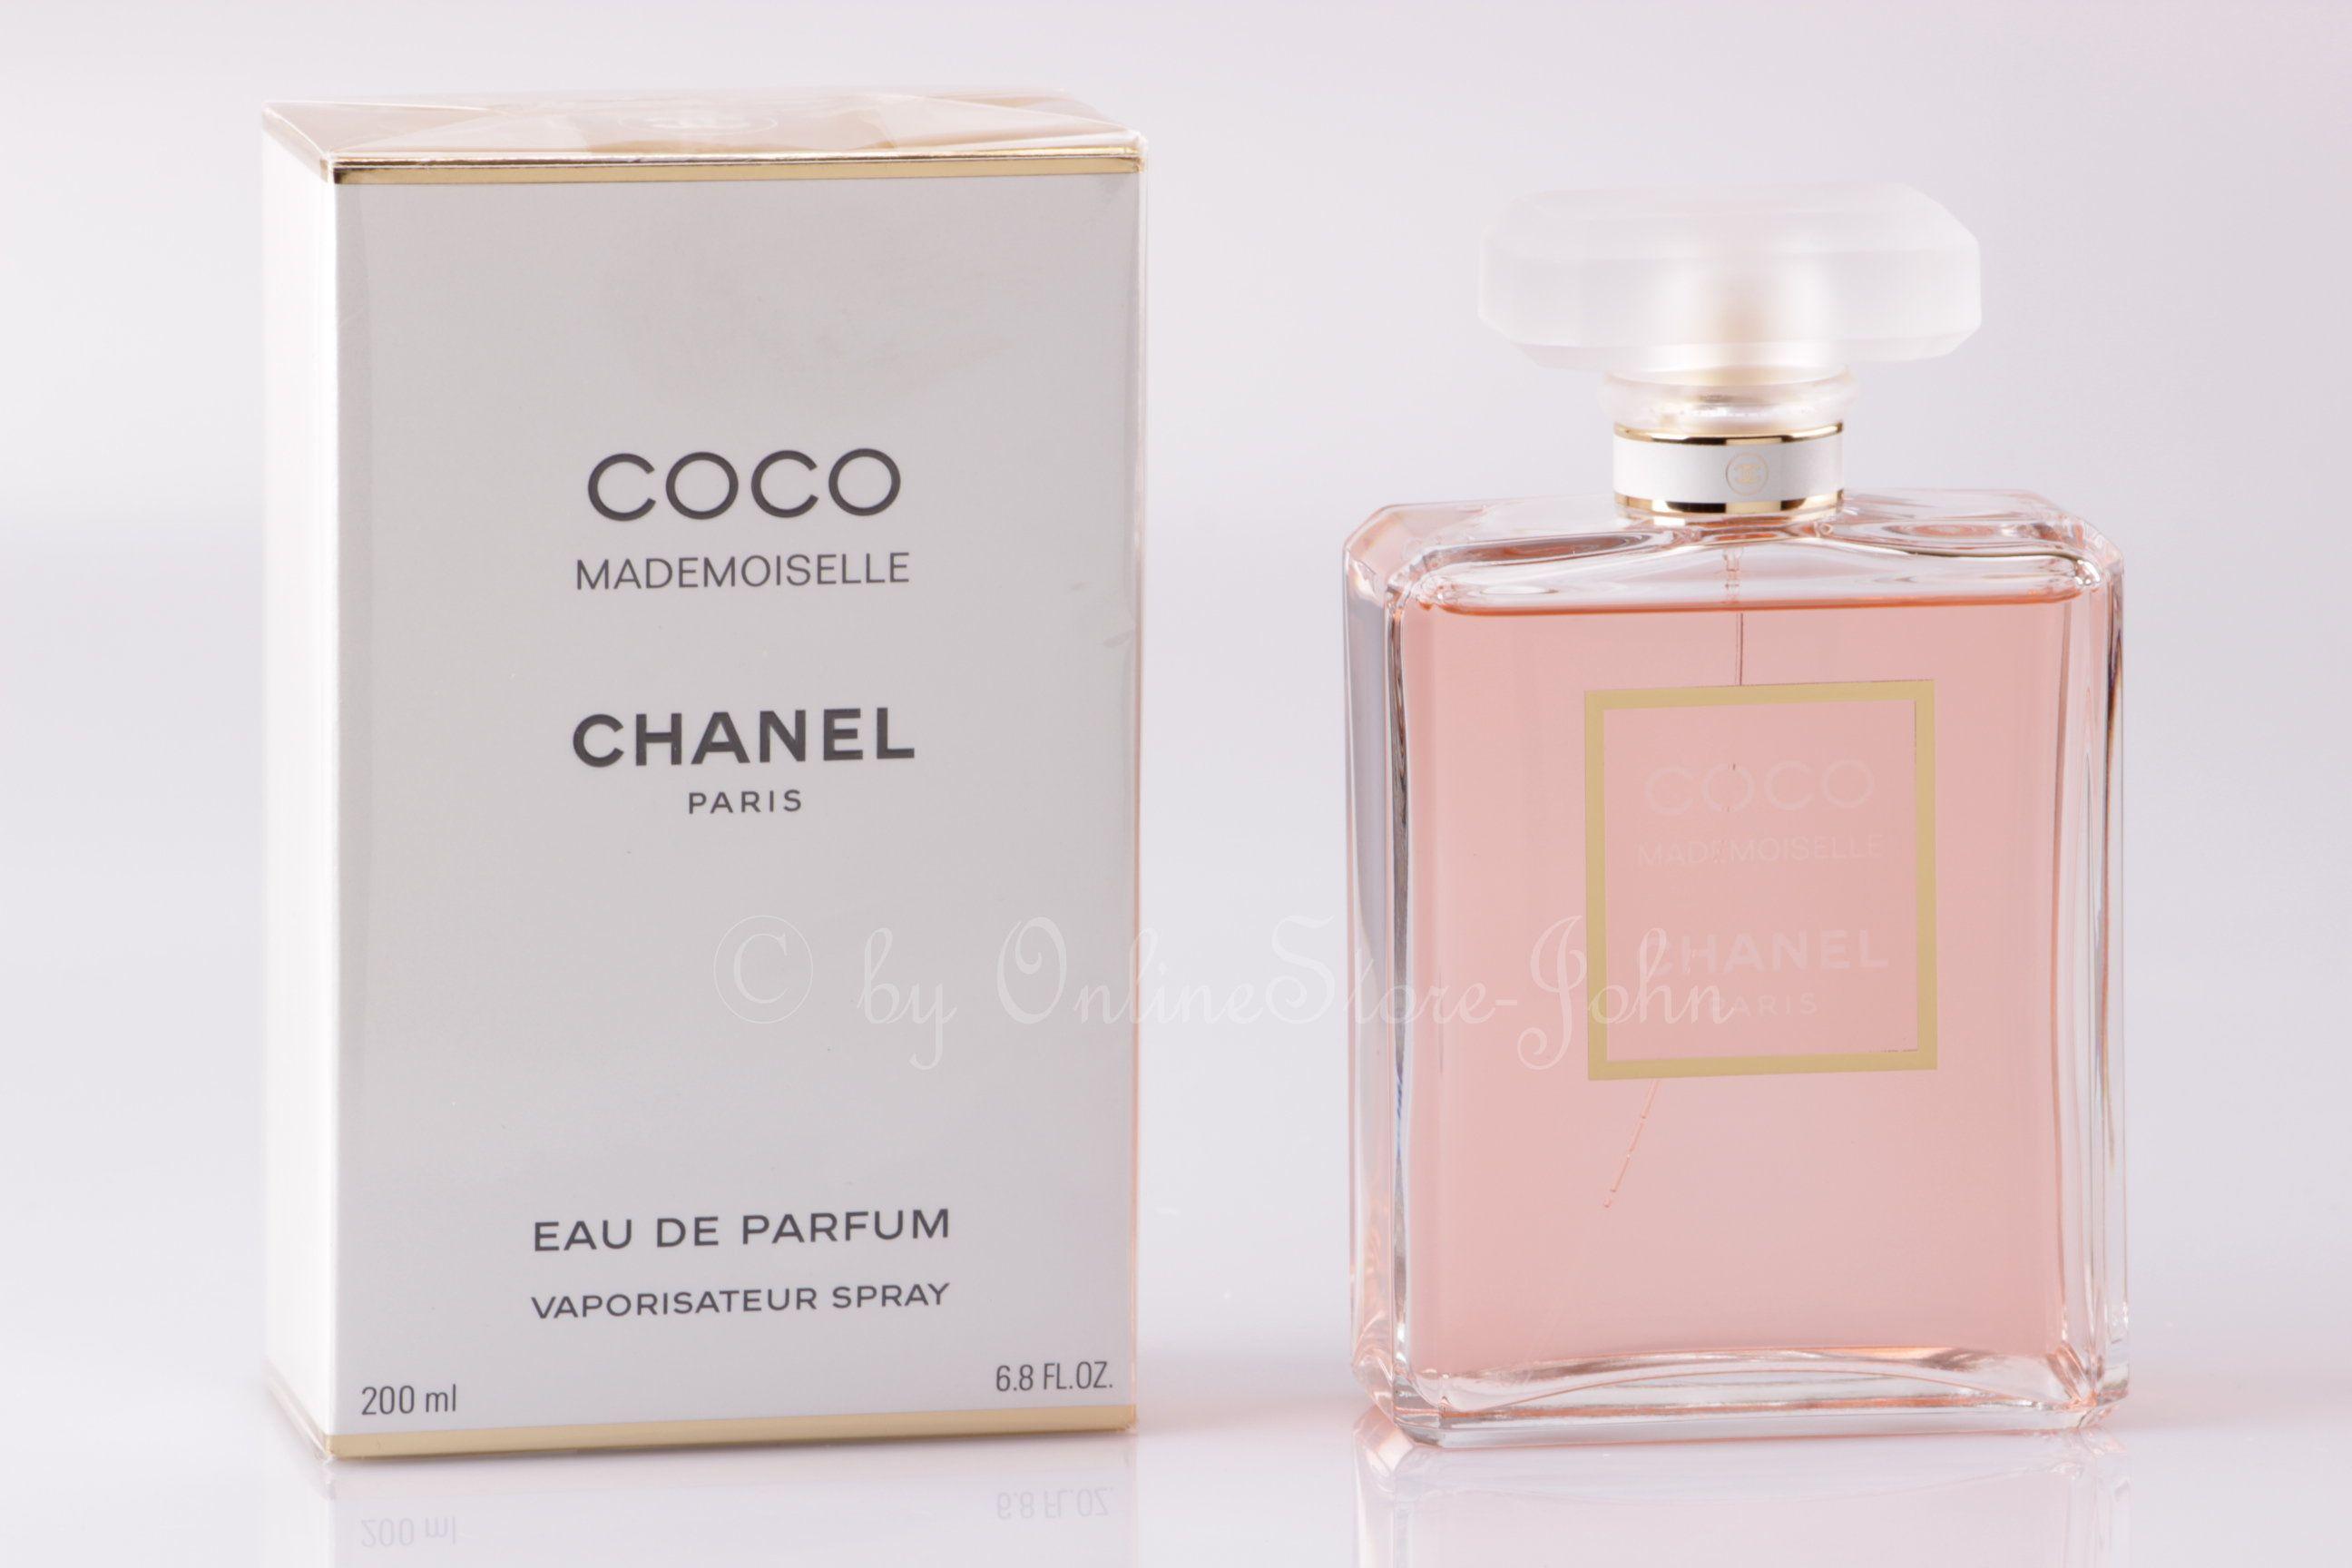 Coco Chanel Perfume Logo - Chanel - Coco Mademoiselle - 200ml EDP Eau de Parfum